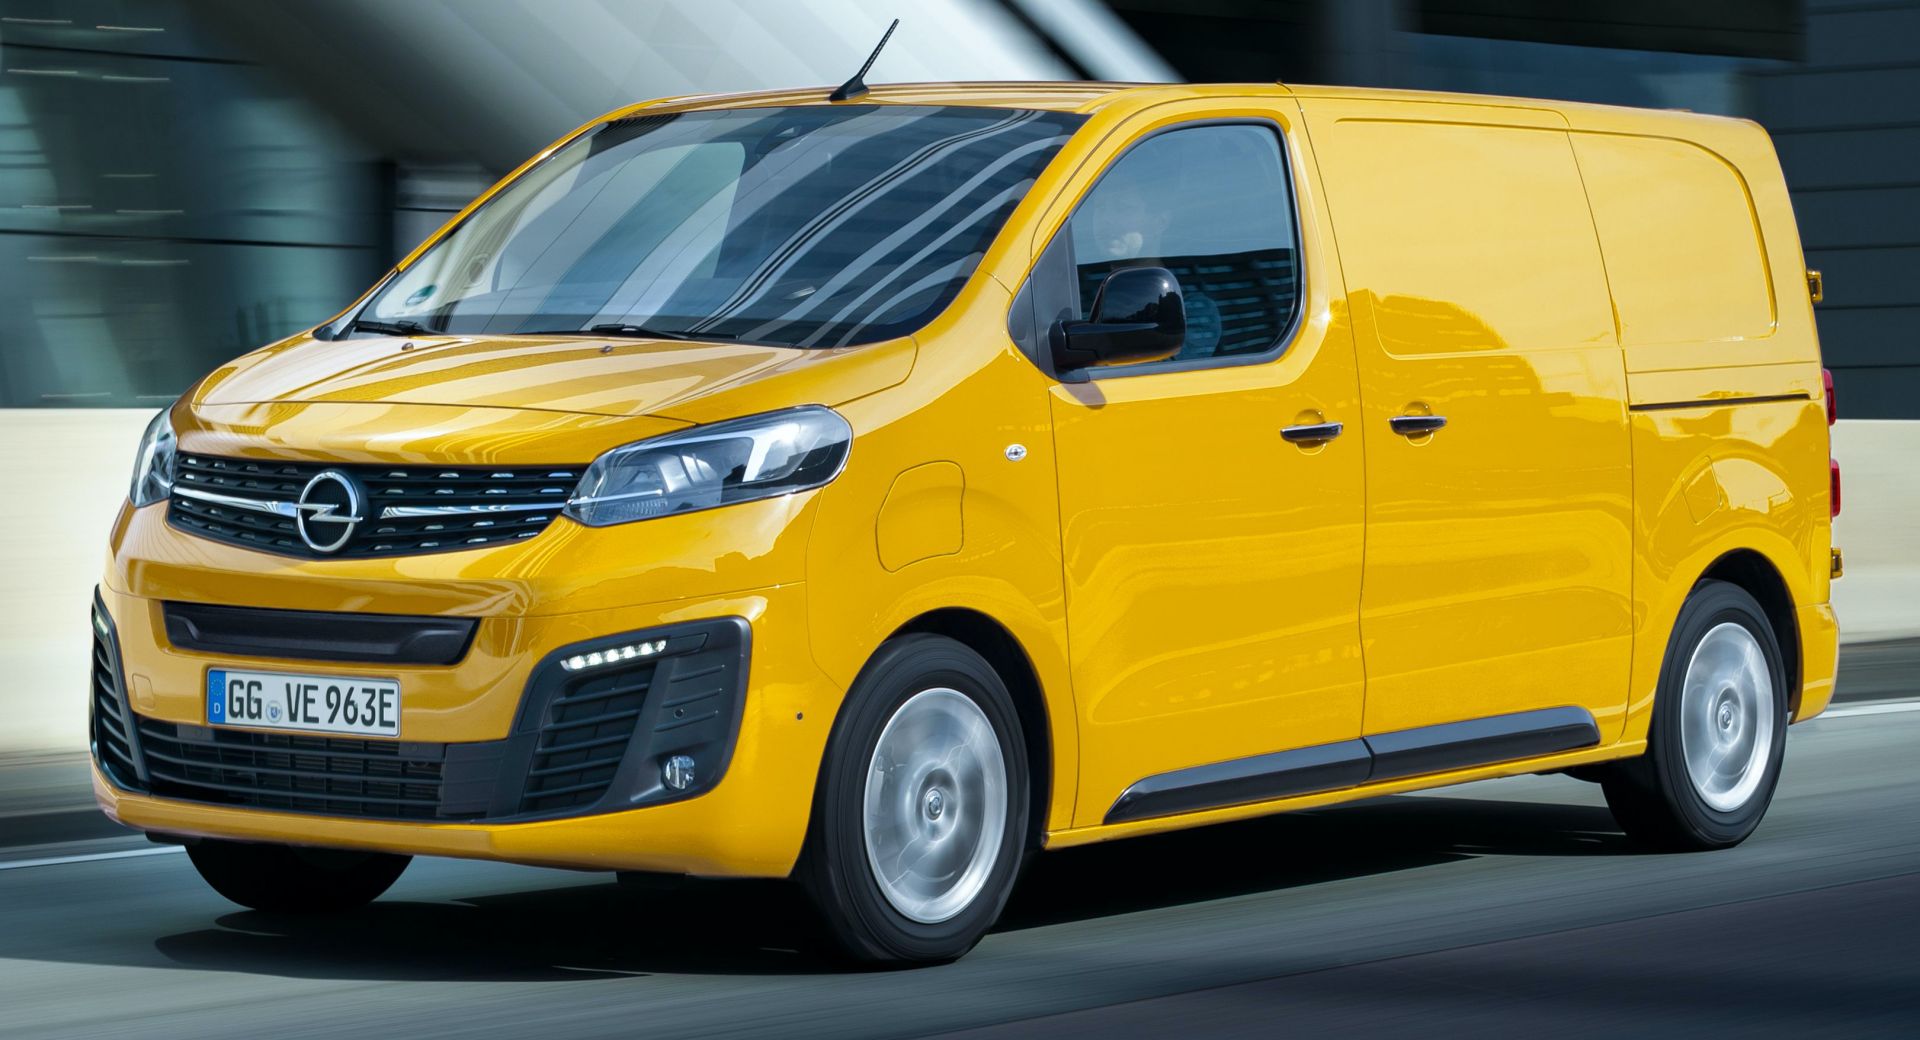 2021 Opel/Vauxhall Vivaro-e Launching This Autumn With 205 Miles Of Range